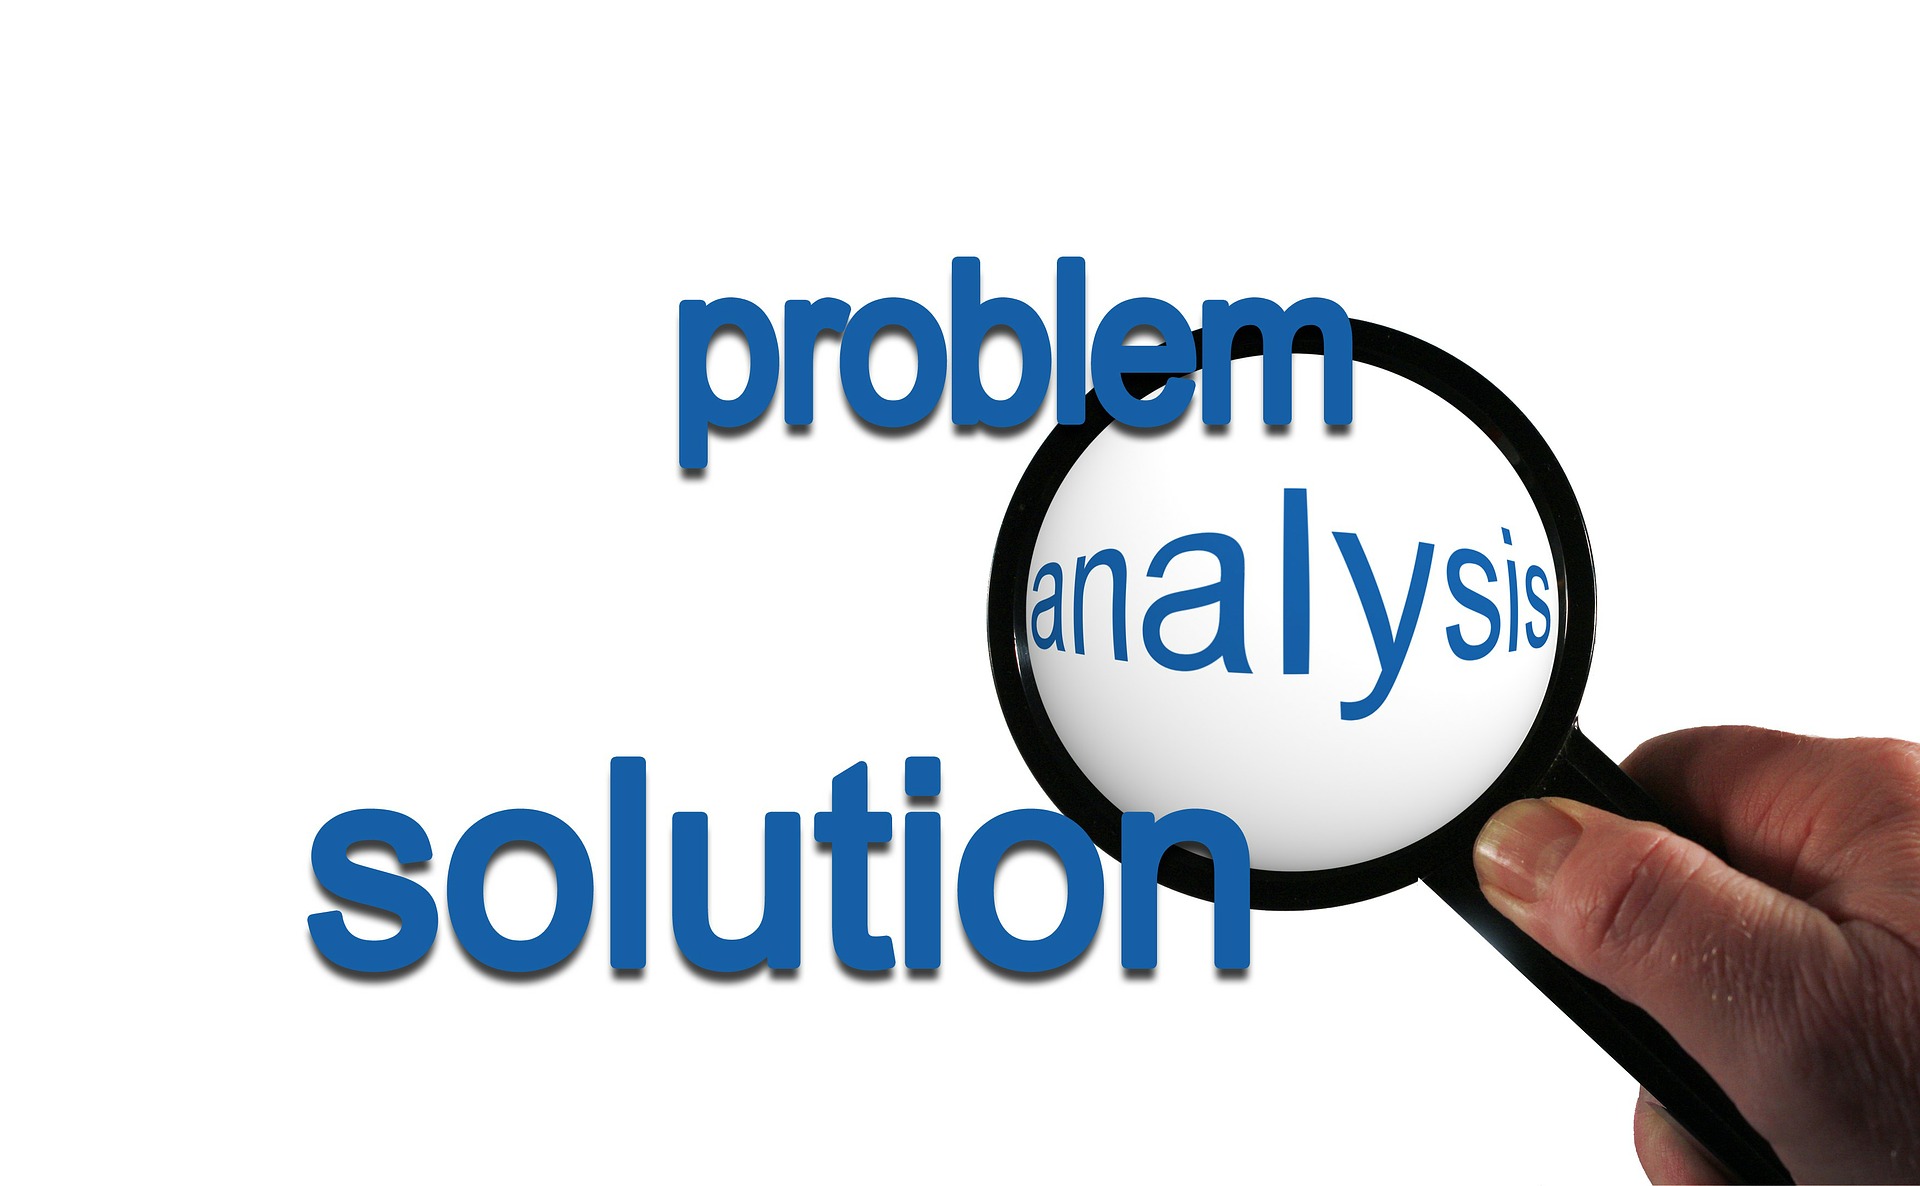 Problem, Analysis, Solution